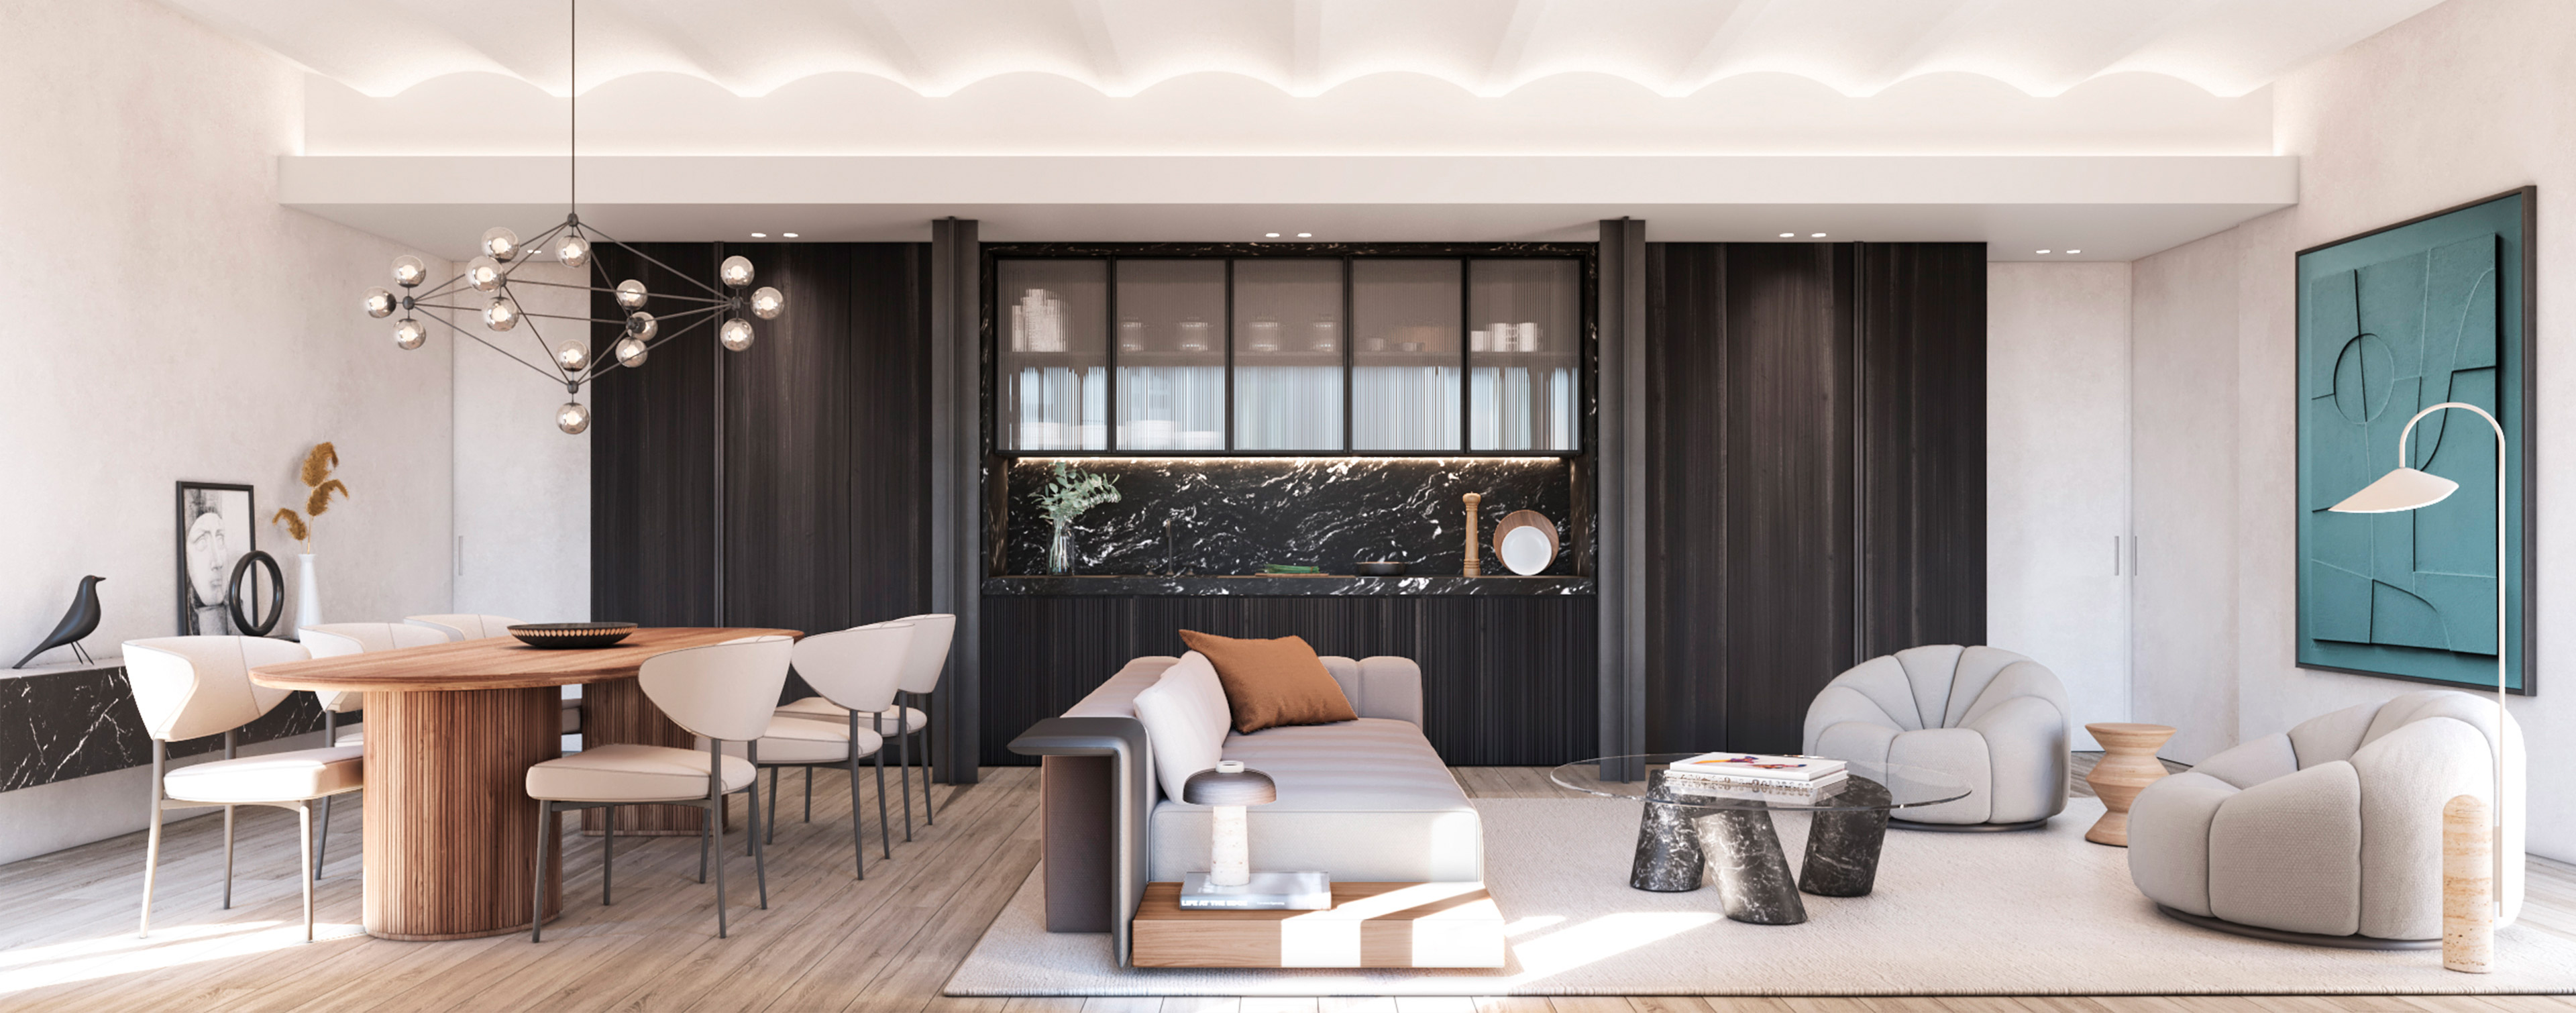 luv studio luxury architects barcelona rambla catalunya apartment IMG 01 - LUV Studio - Architecture et design - Barcelone